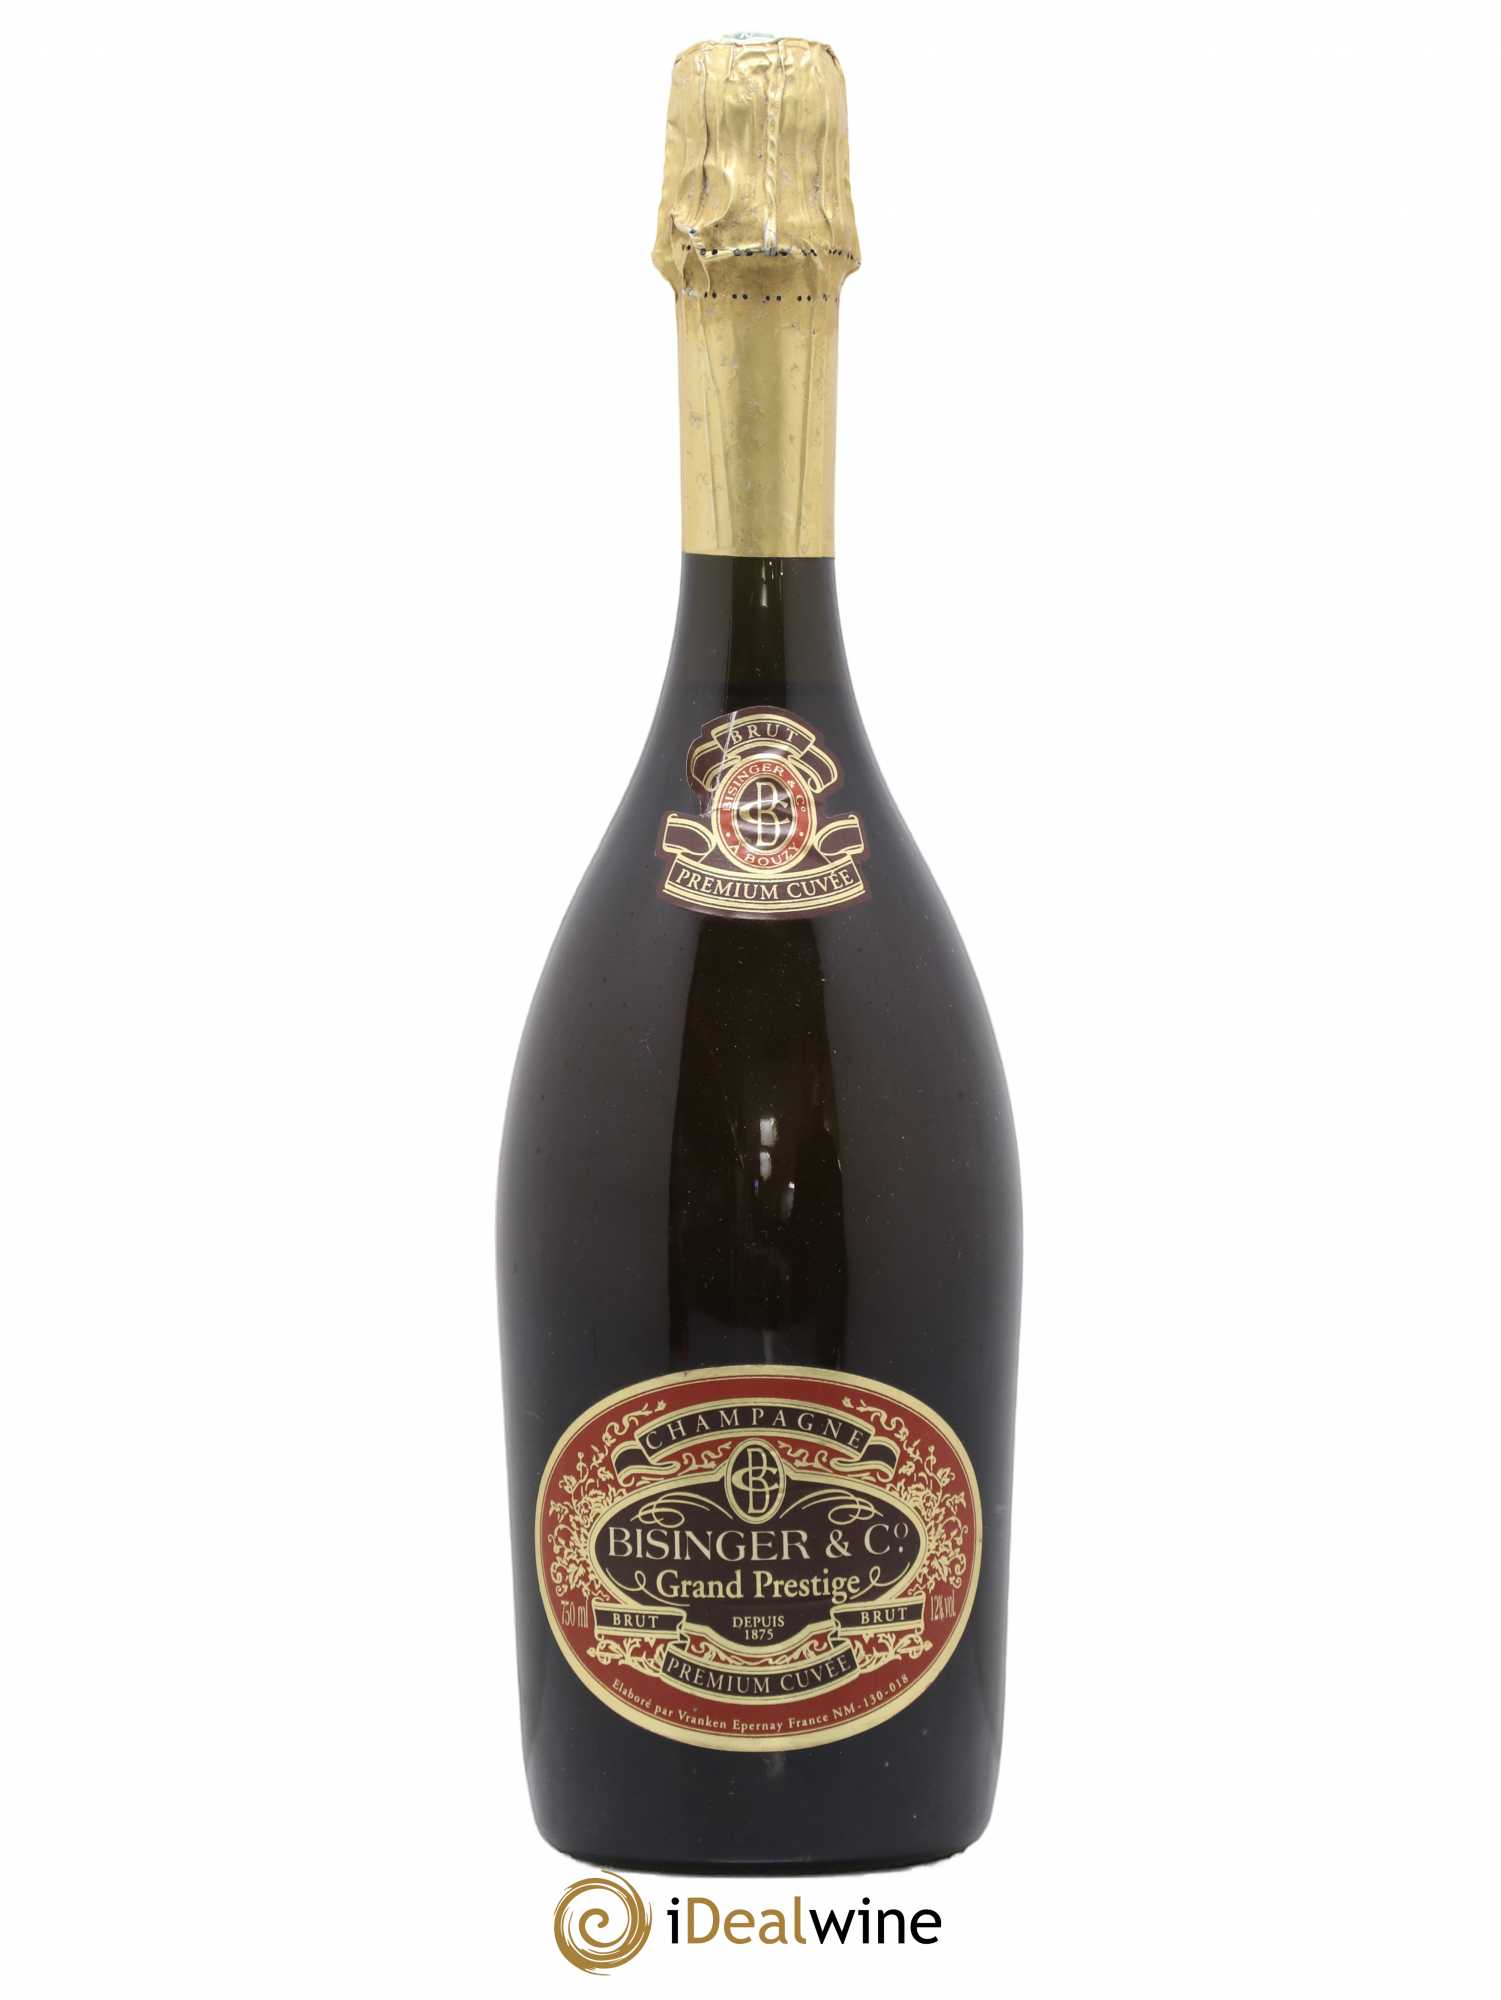 Buy Champagne Bisinger & Co Cuvée Premium Grand Prestige (lot: 1270) Brut